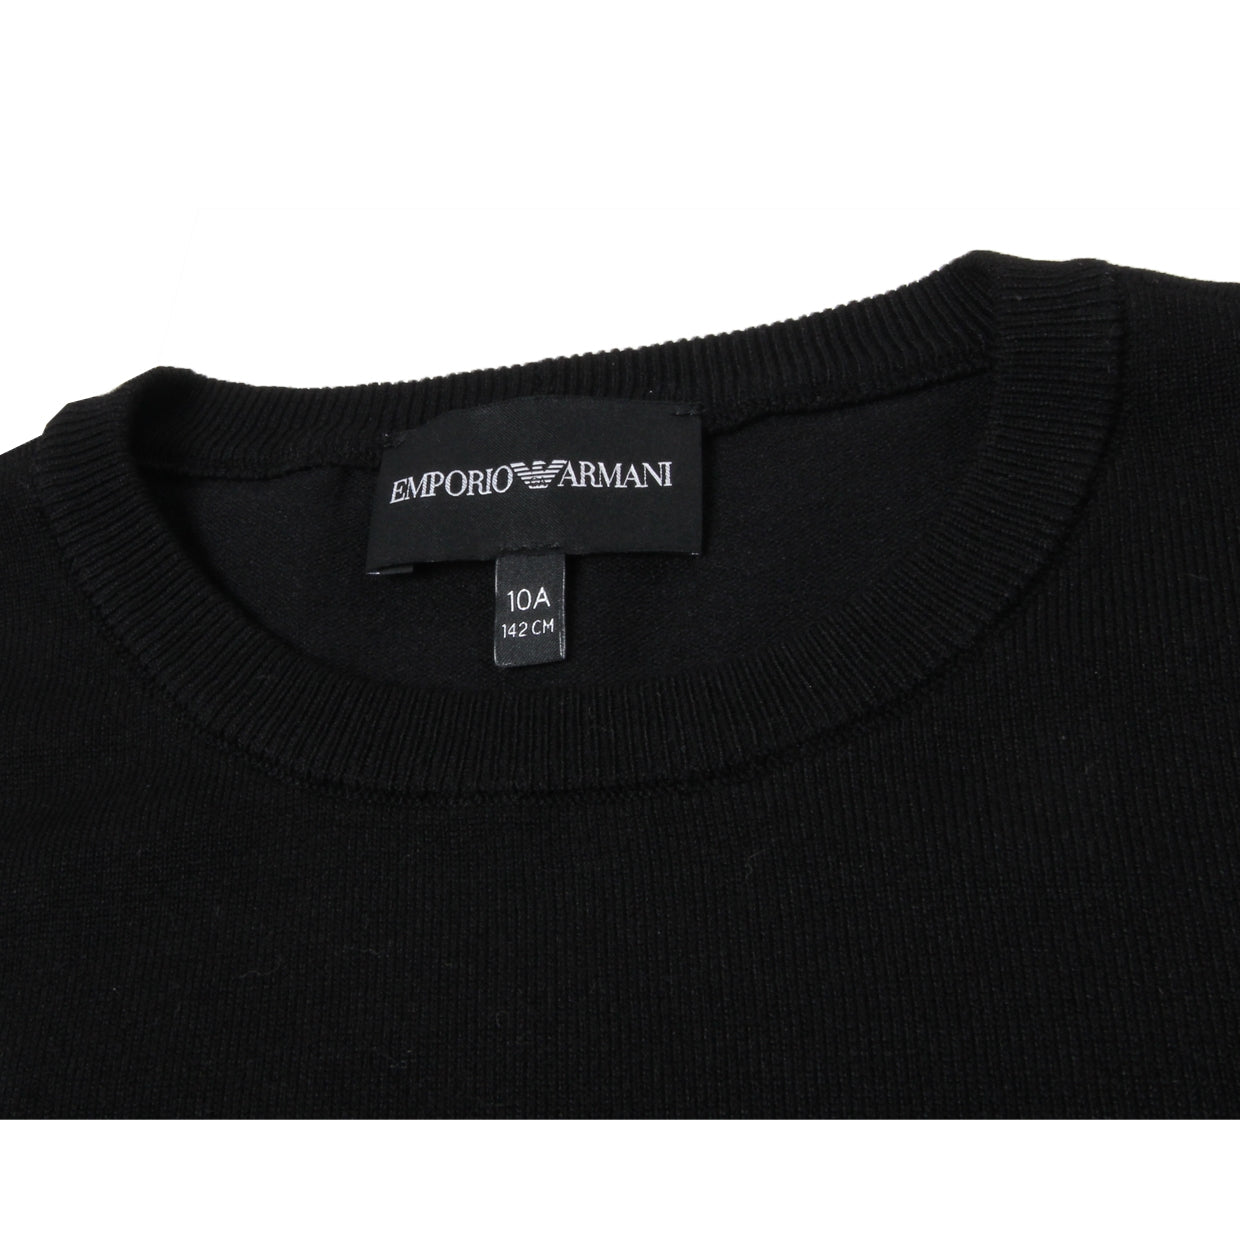 Armani Junior Logo Black Knit Top Neck